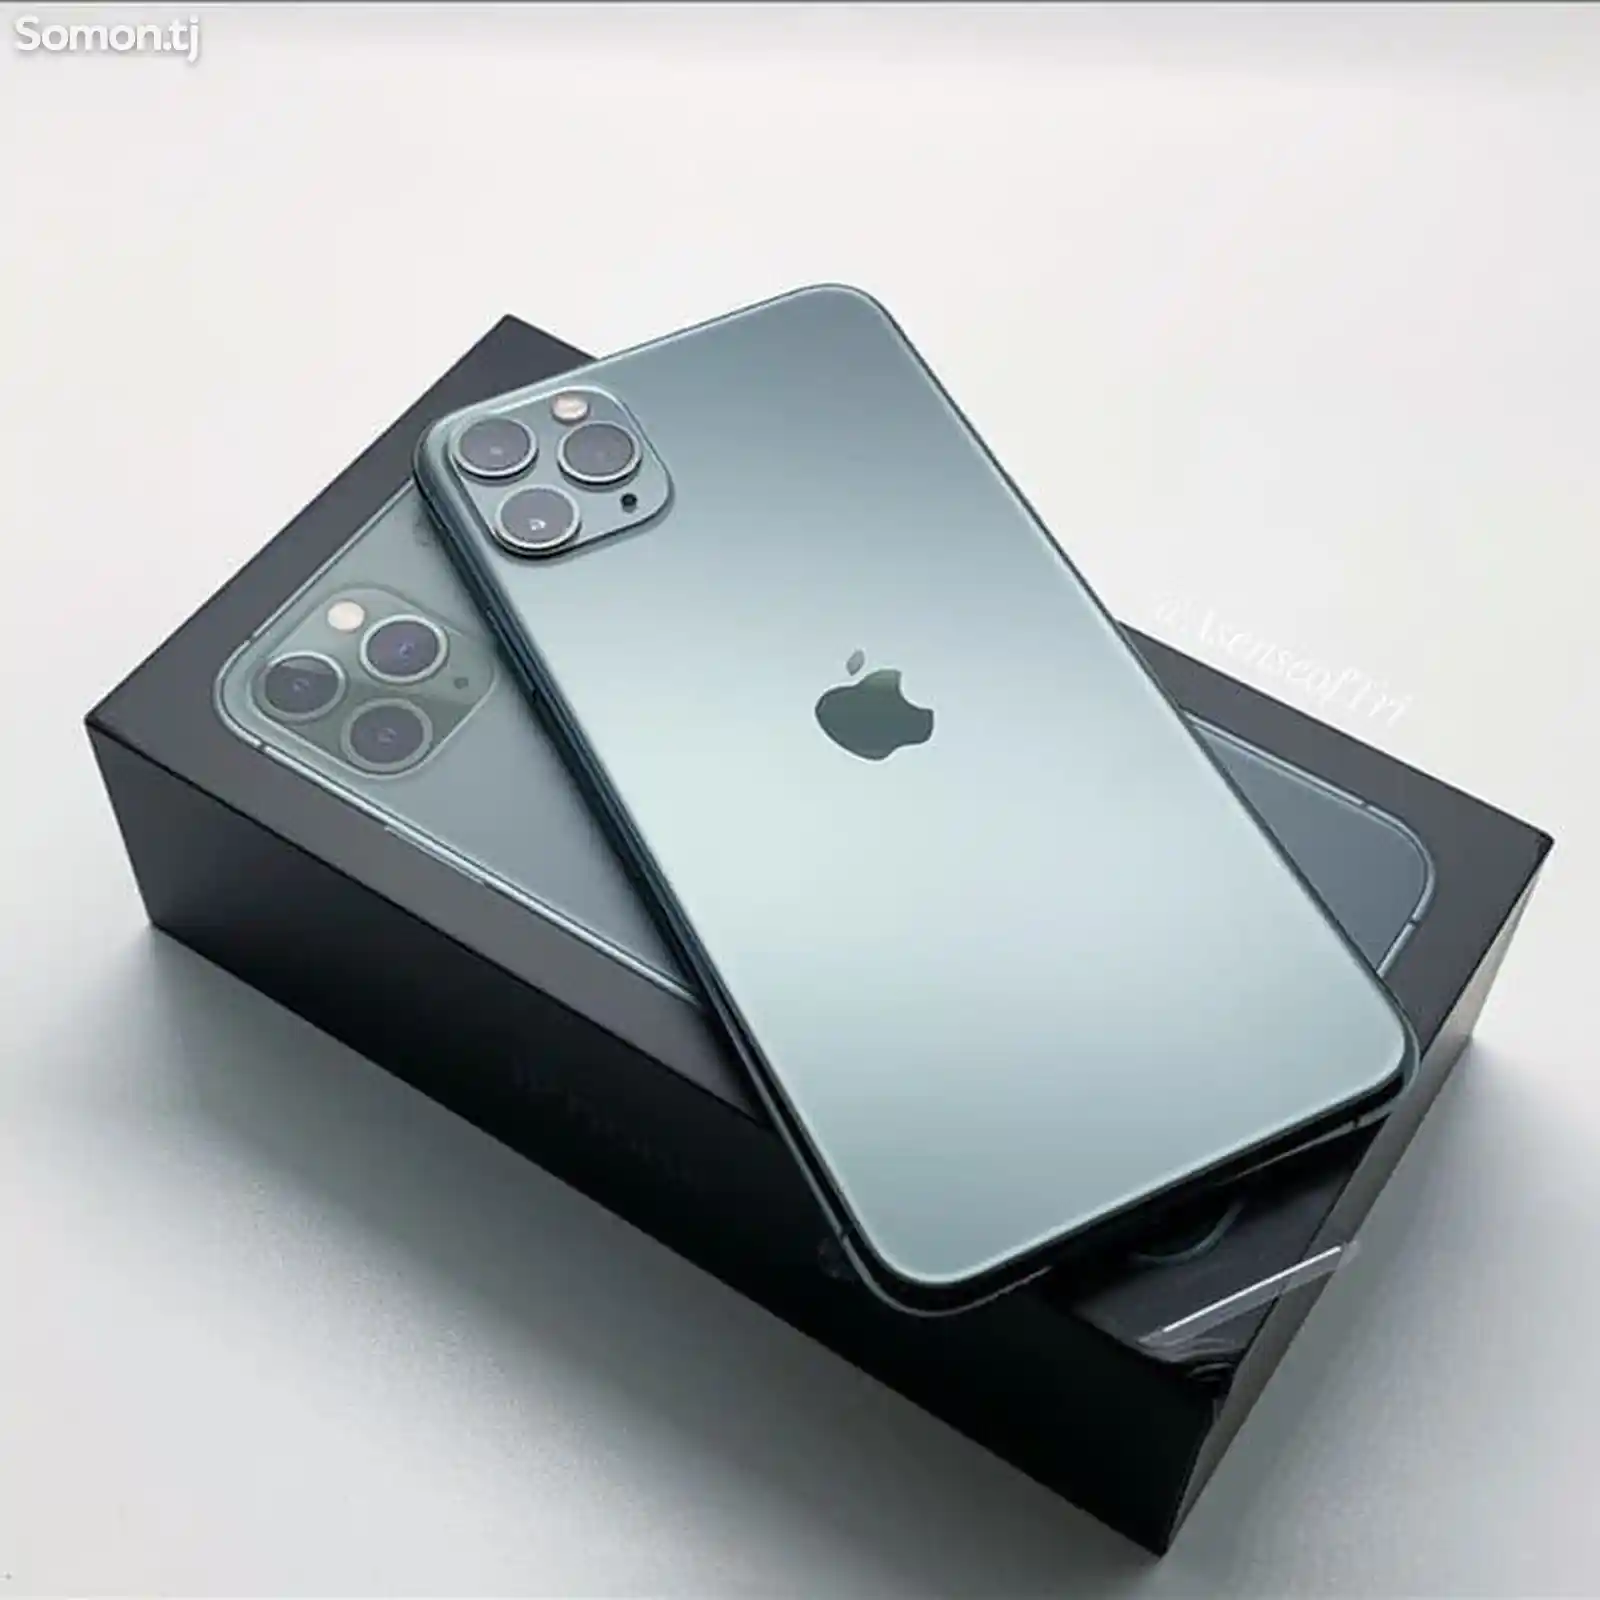 Apple iPhone 11 Pro Max, 256 gb, Space Grey